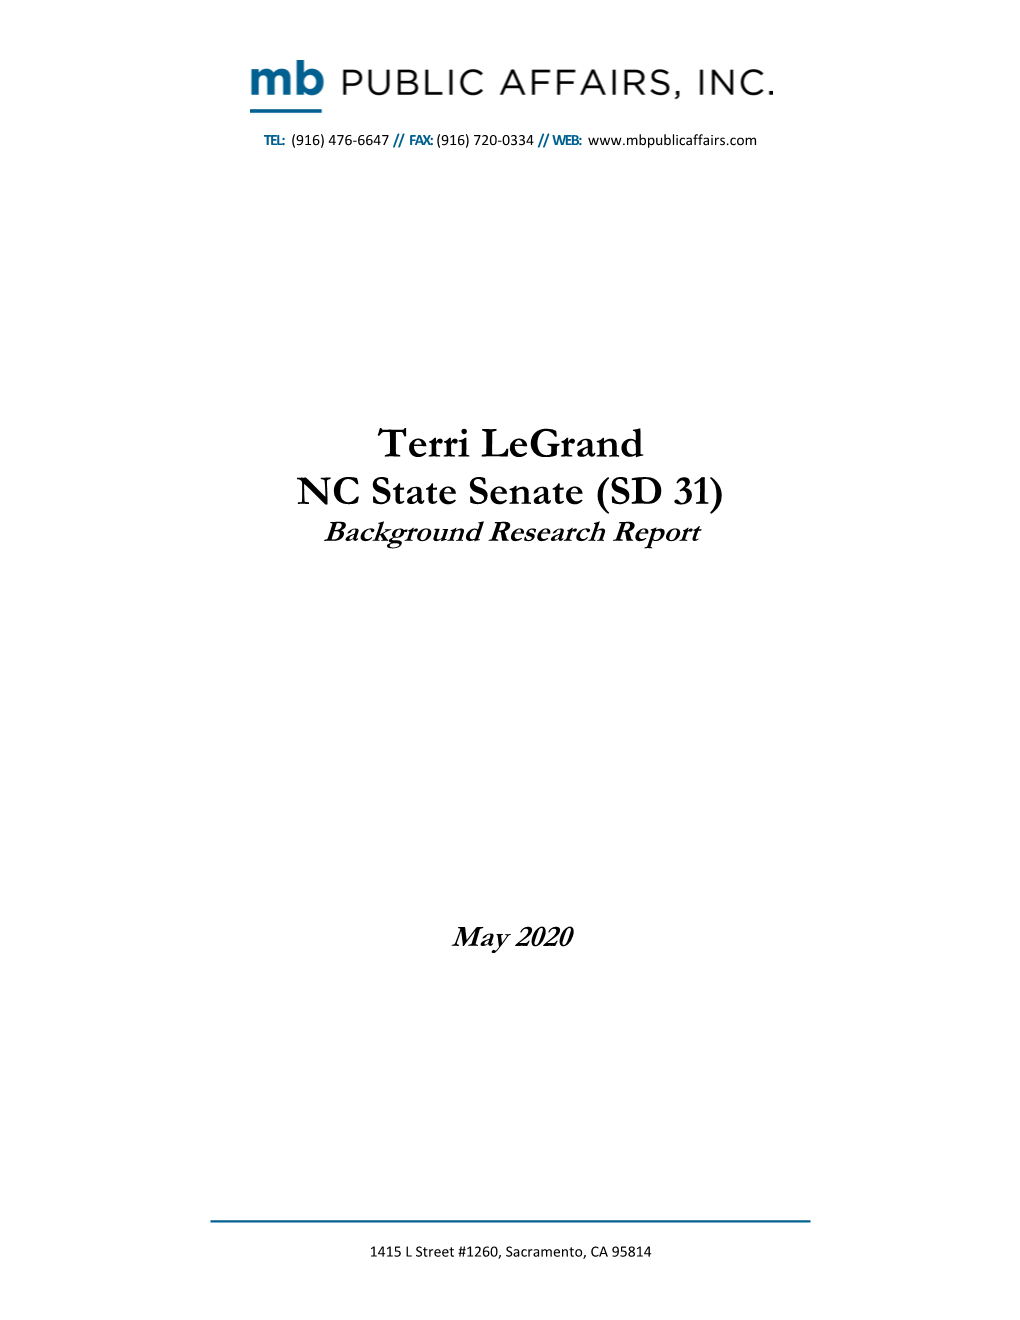 Terri Legrand NC State Senate (SD 31) Background Research Report